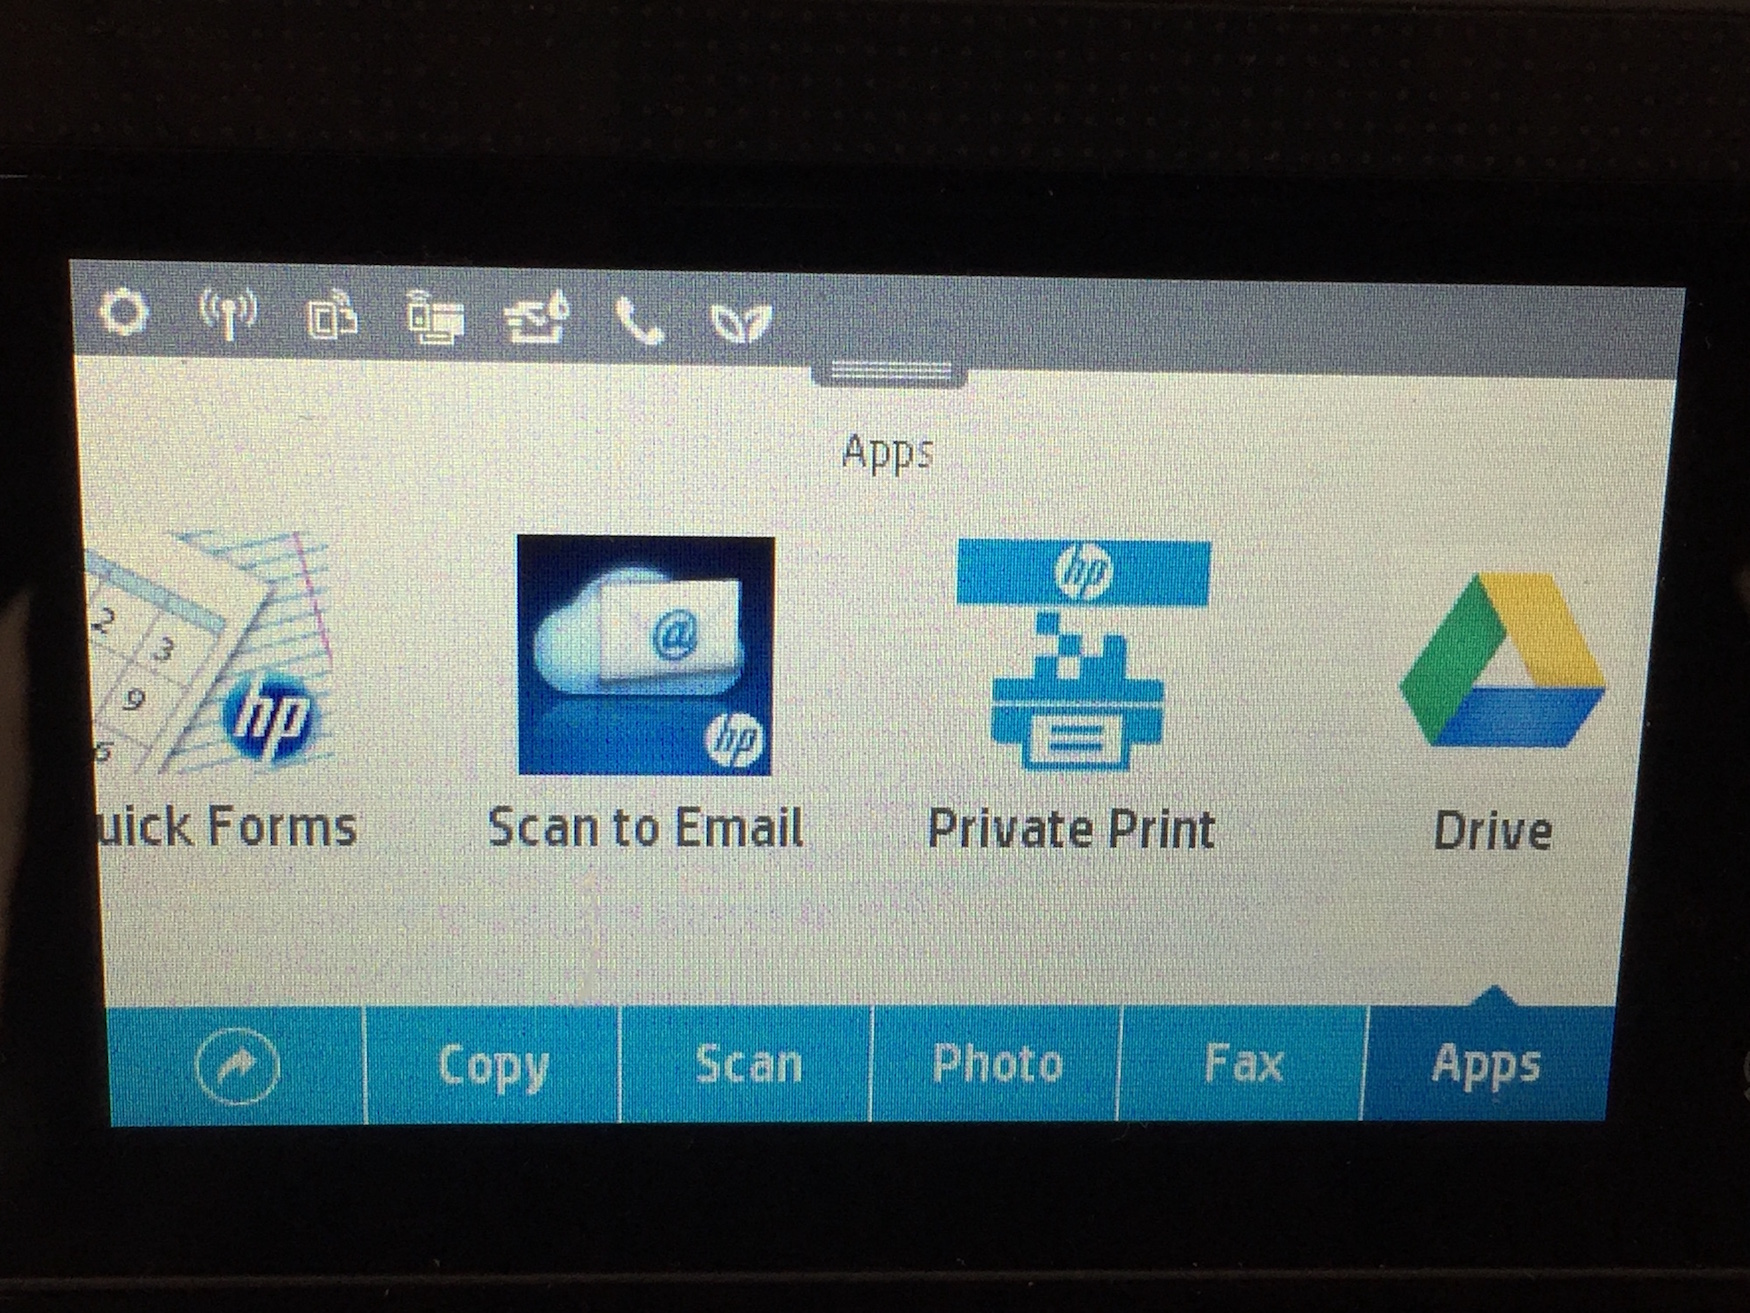 Print Apps menu